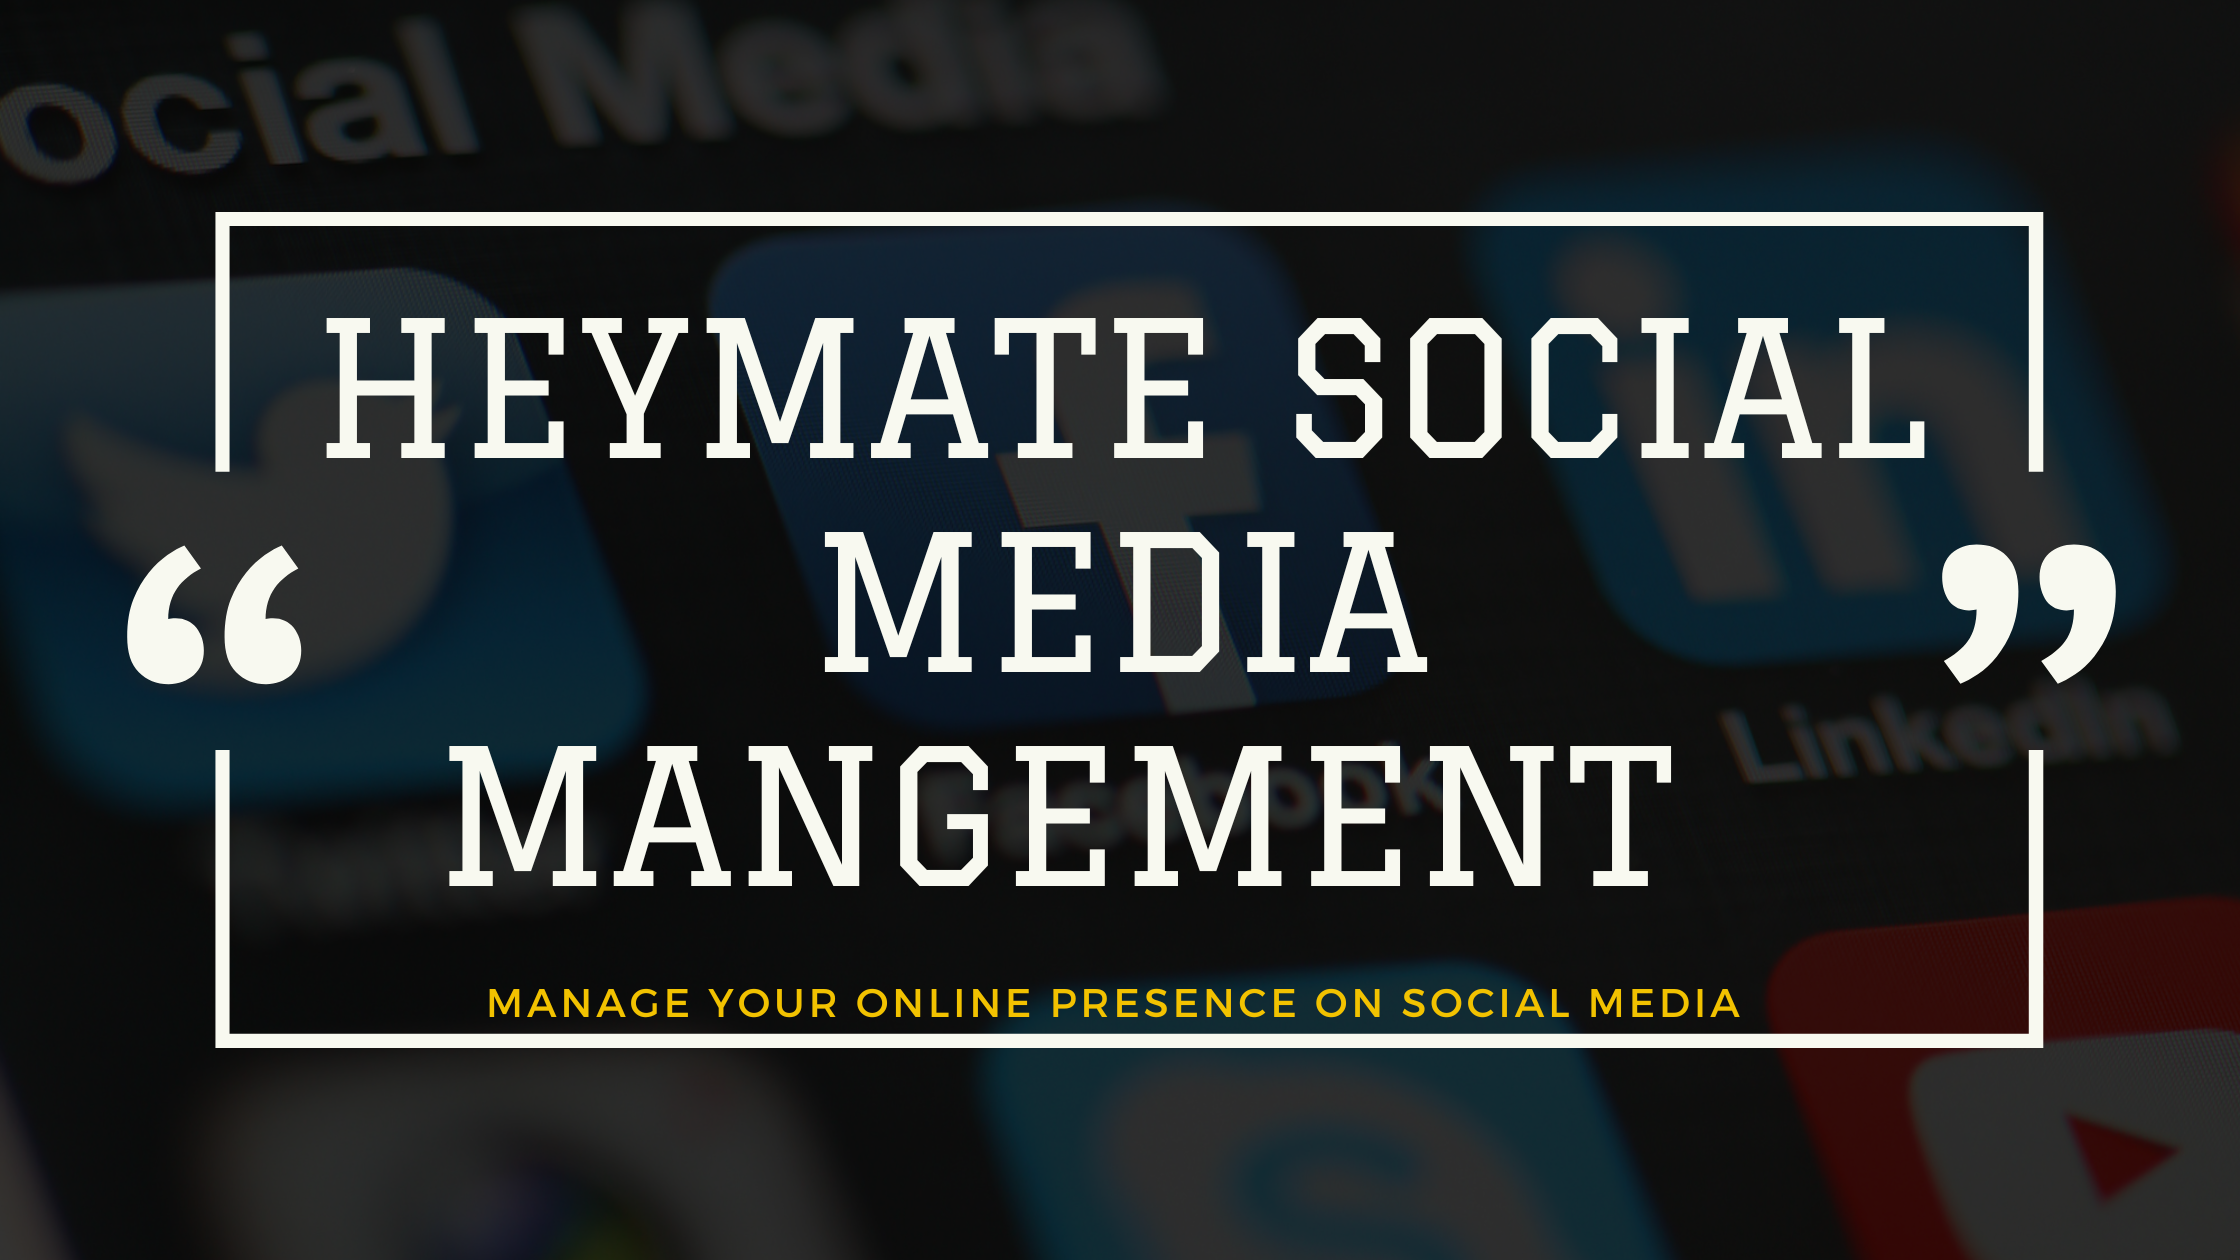 Heymate Social Media Management Services